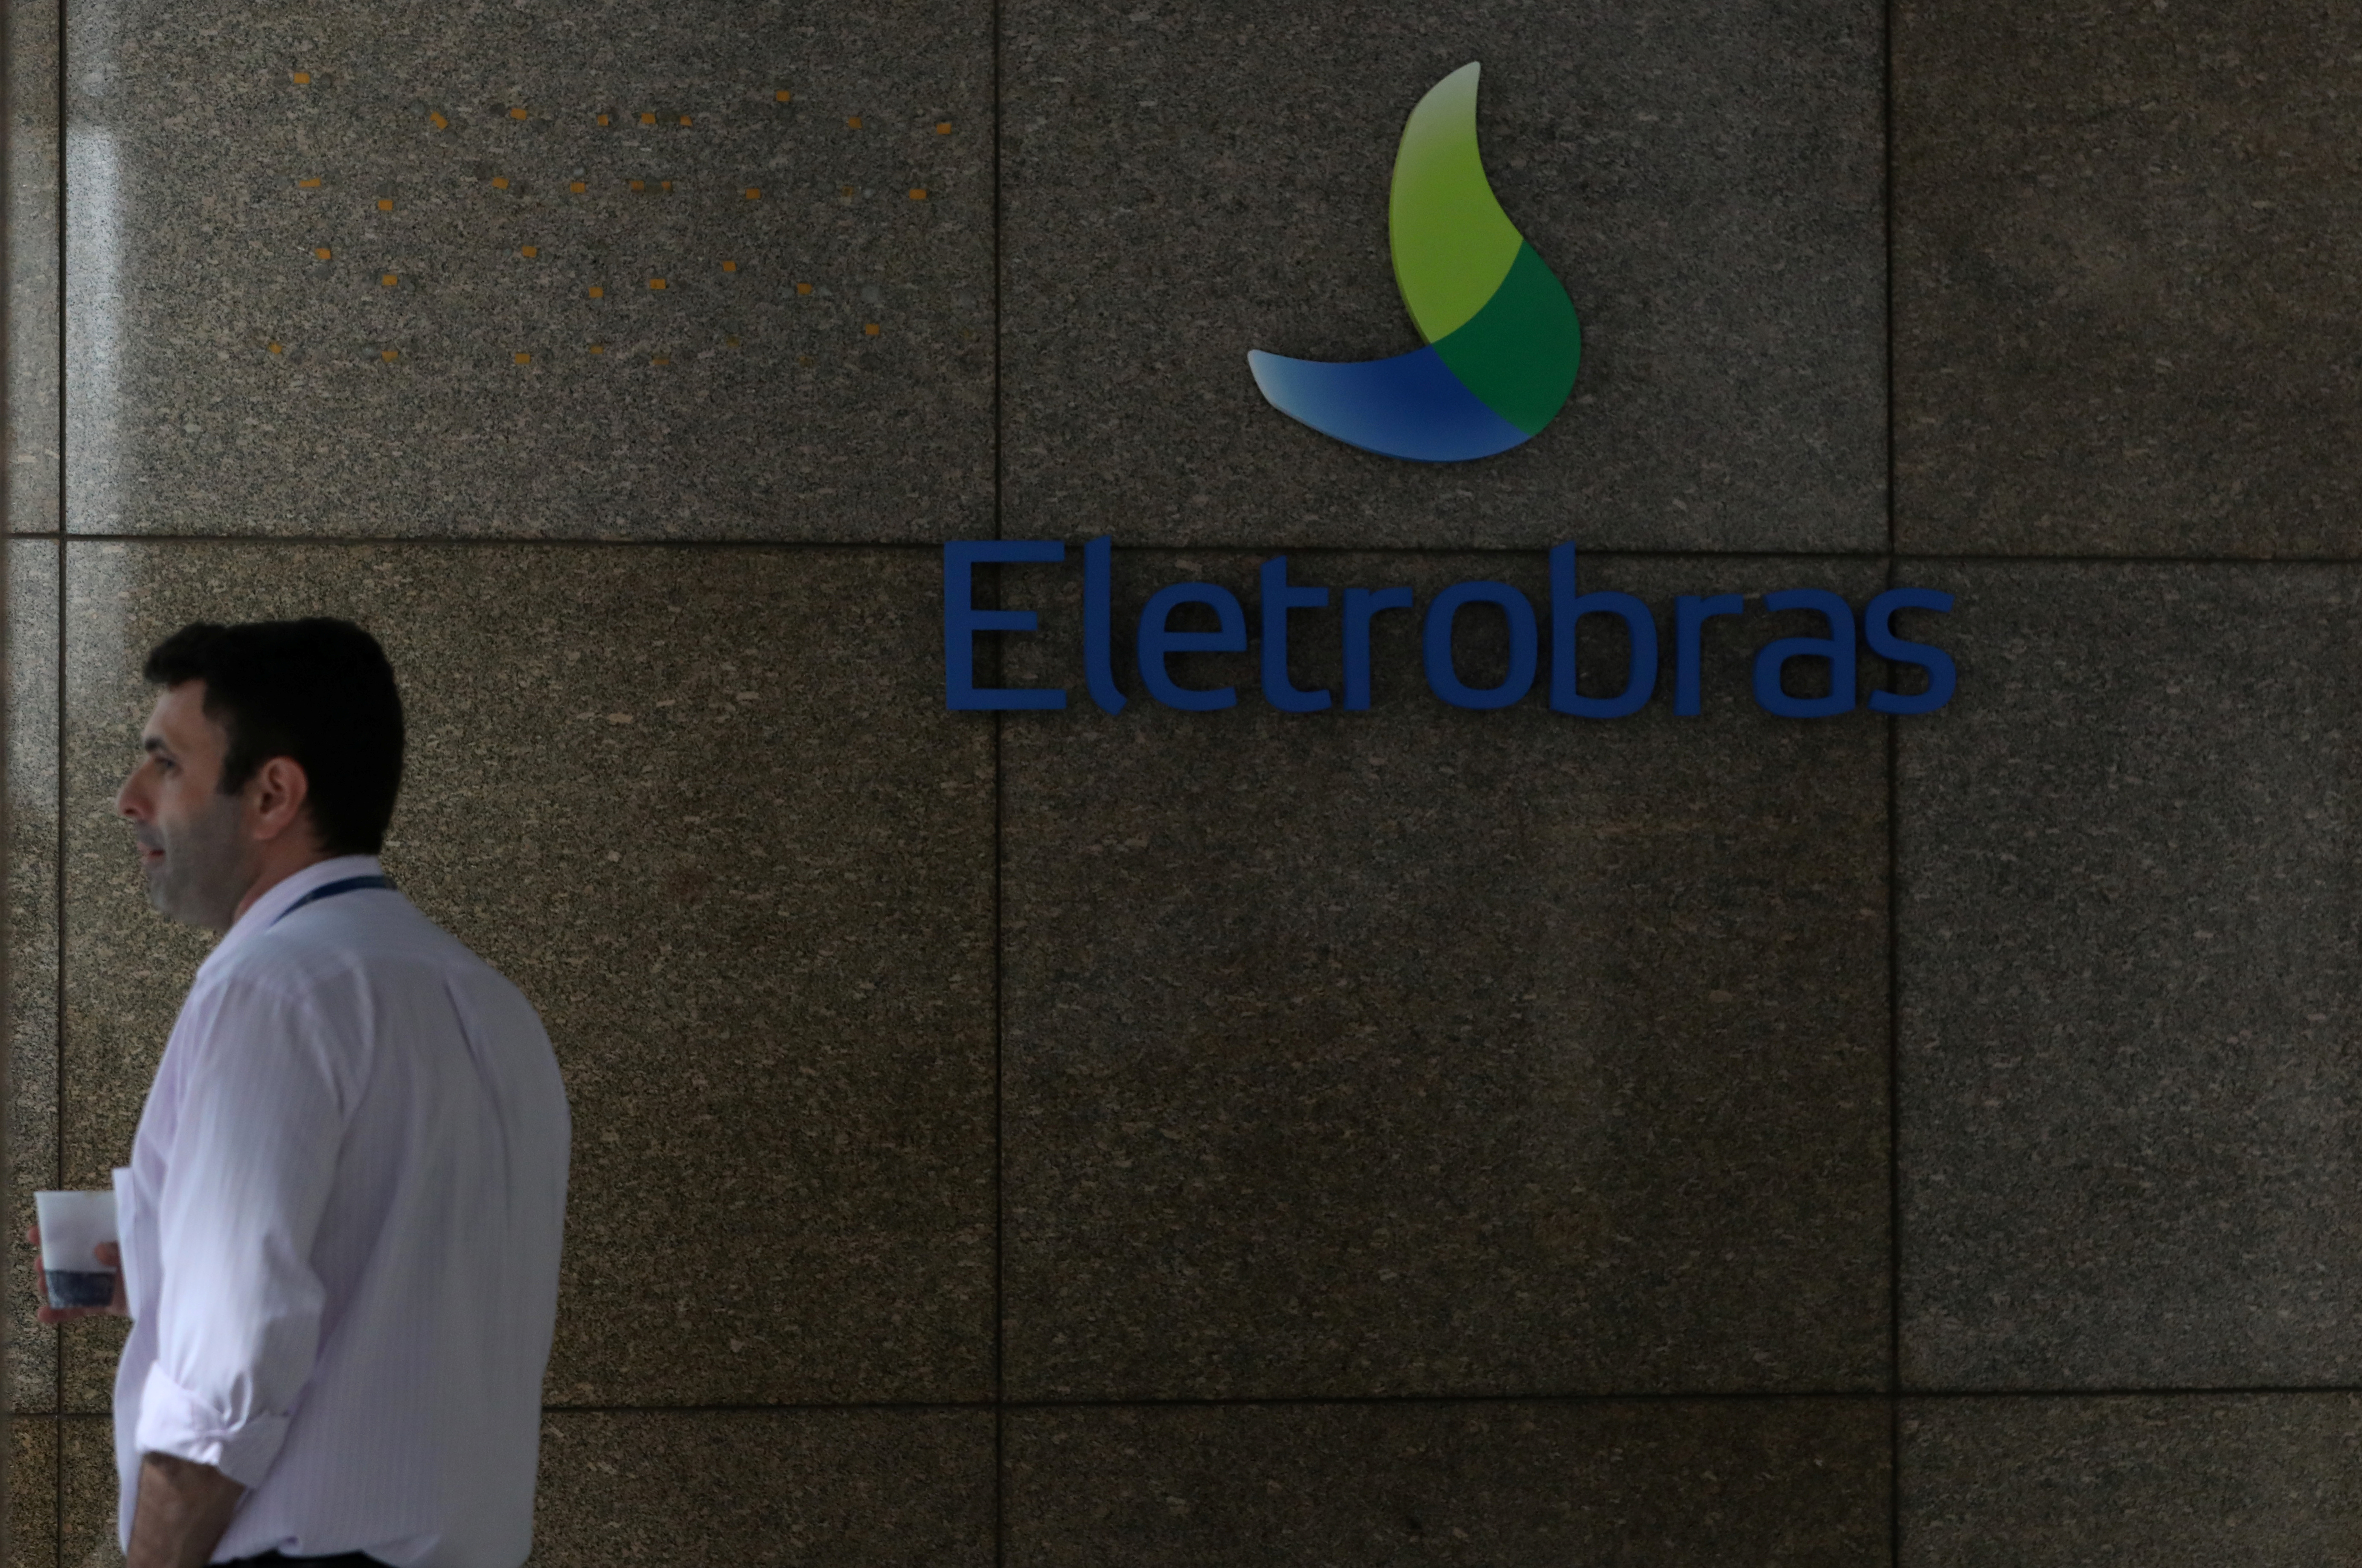 A person stands next to the logo of Brazil's power company Eletrobras in Rio de Janeiro